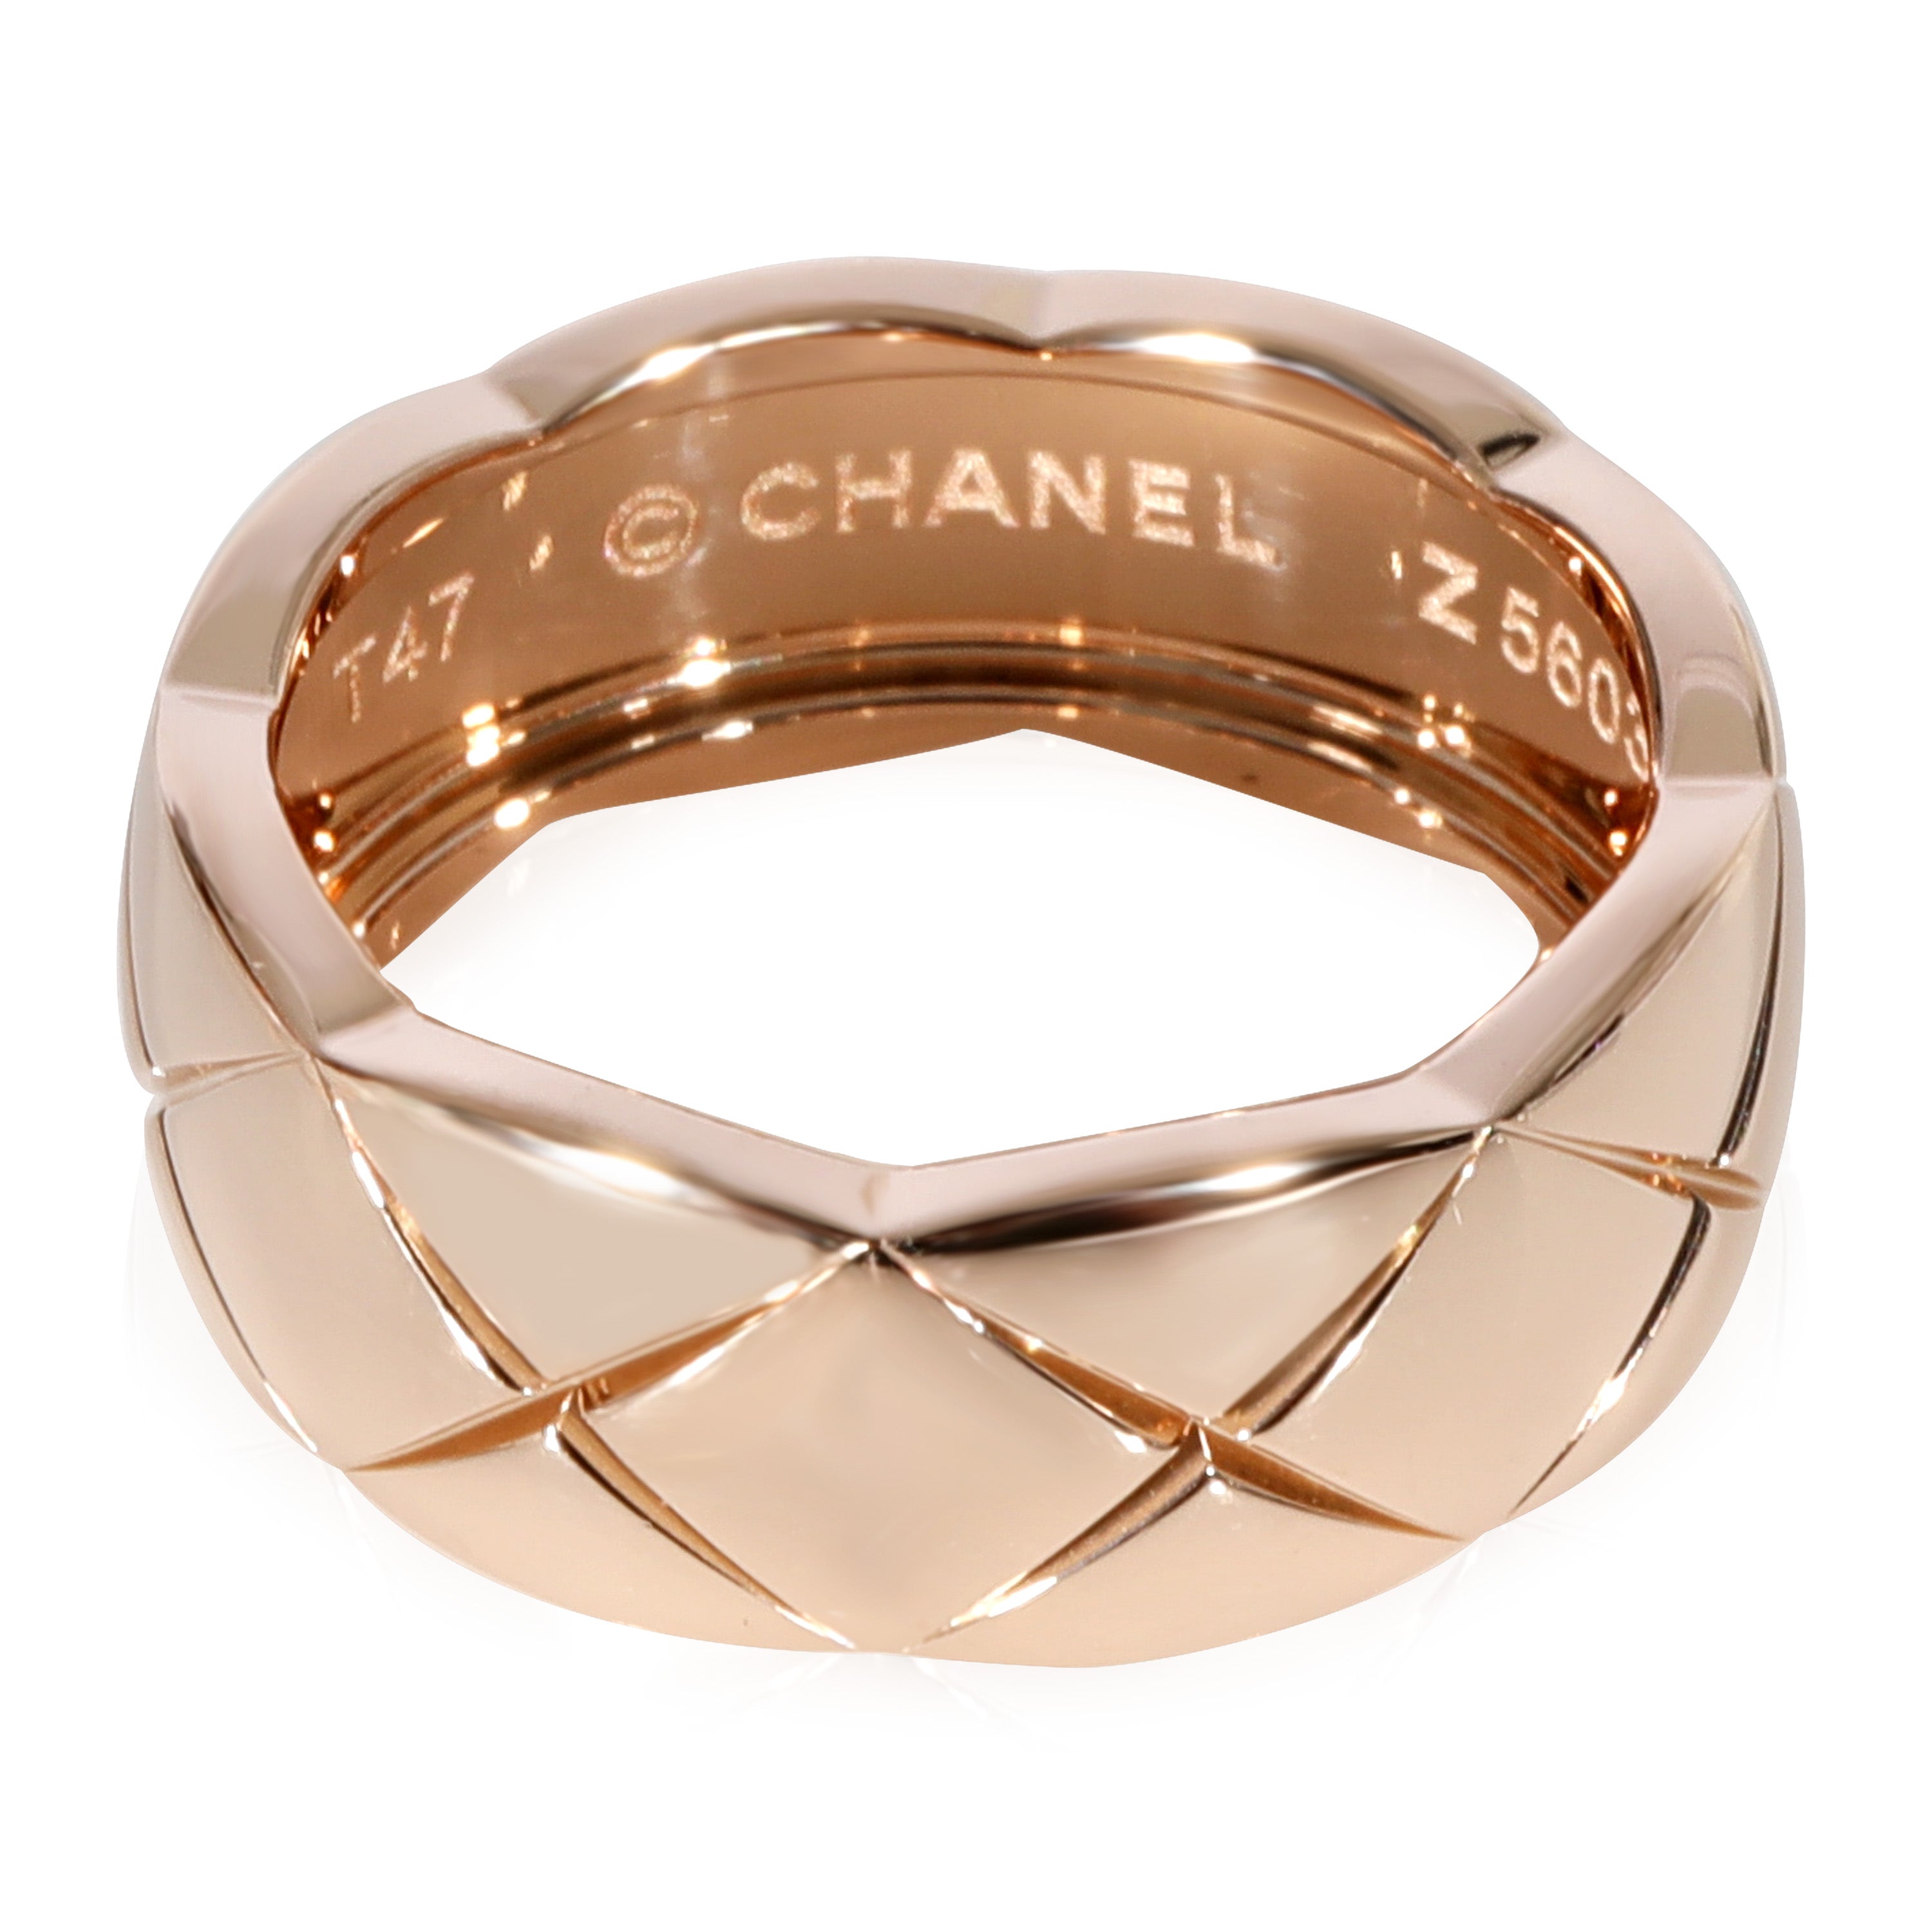 Chanel Coco Crush Ring Large K18Yg #59 J10574 Size 9.5